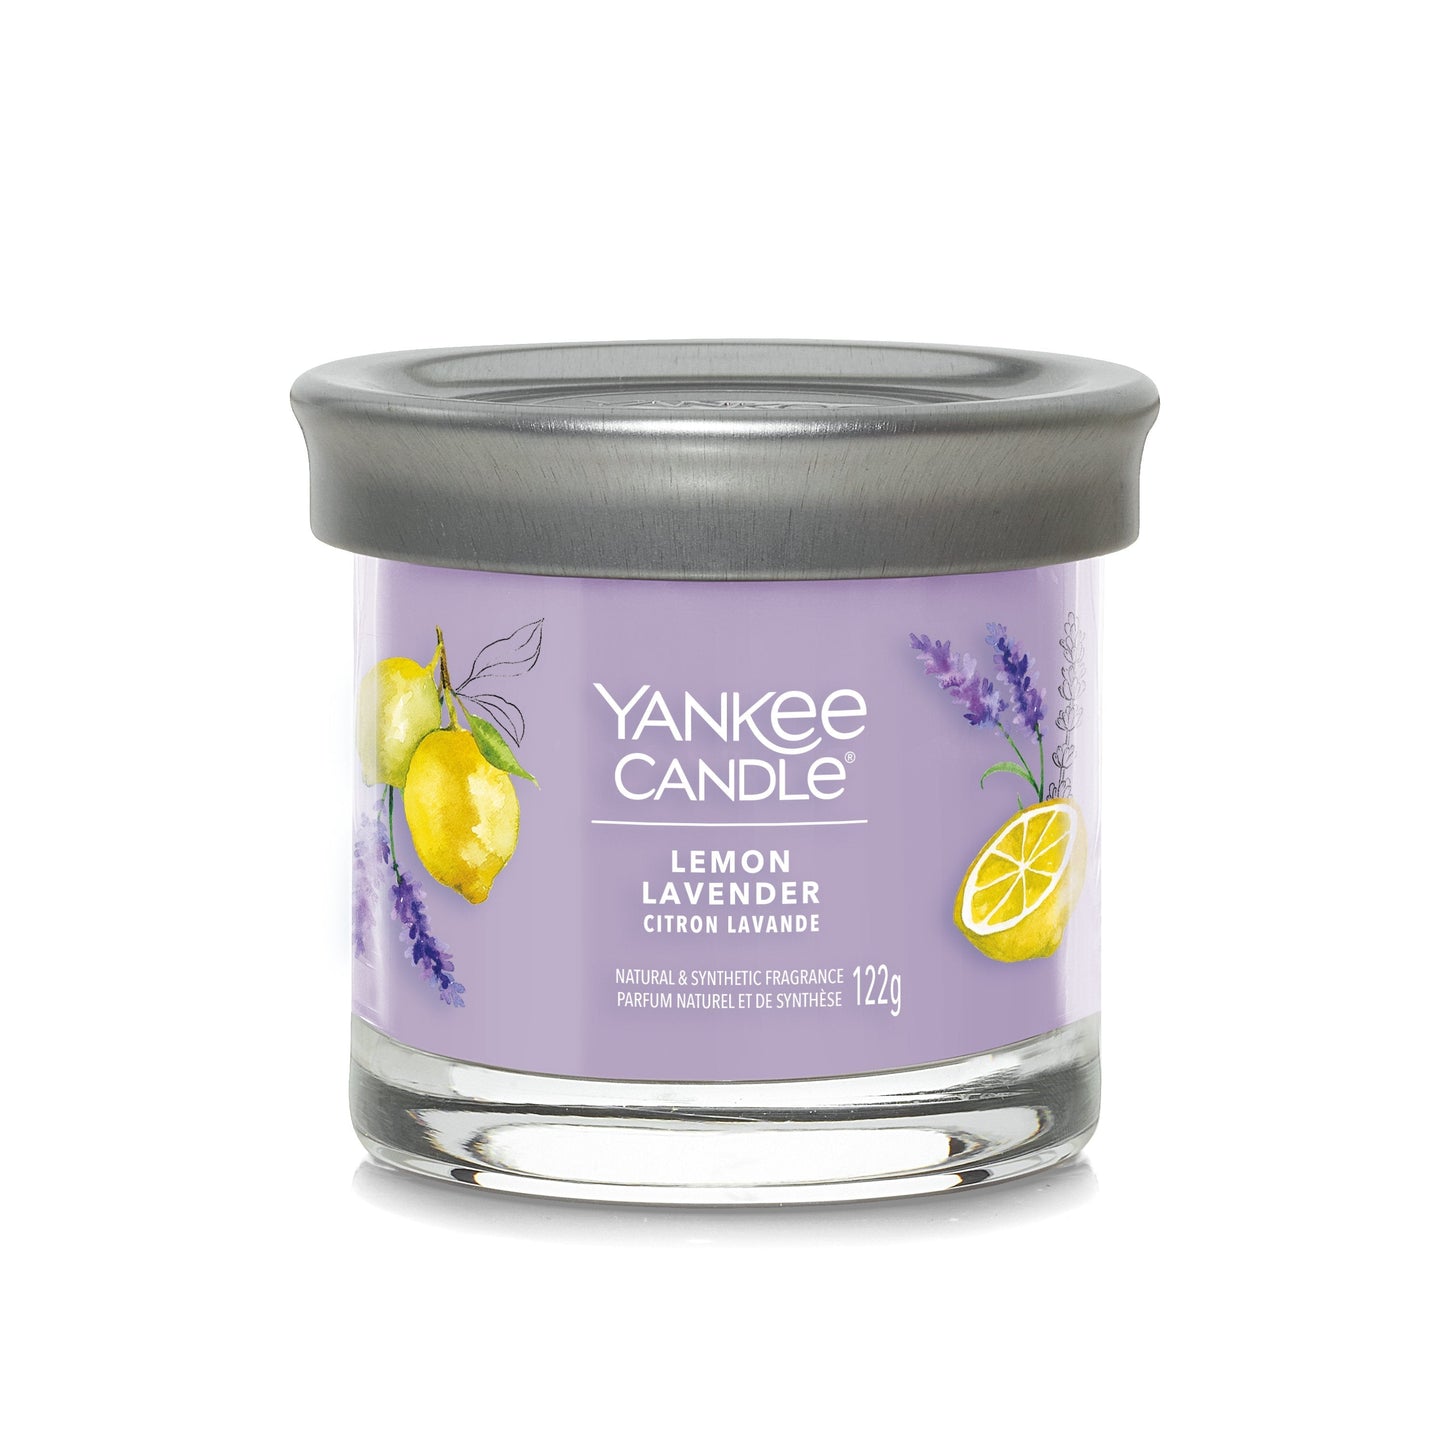 Yankee Candle Lemon Lavender Small Tumbler